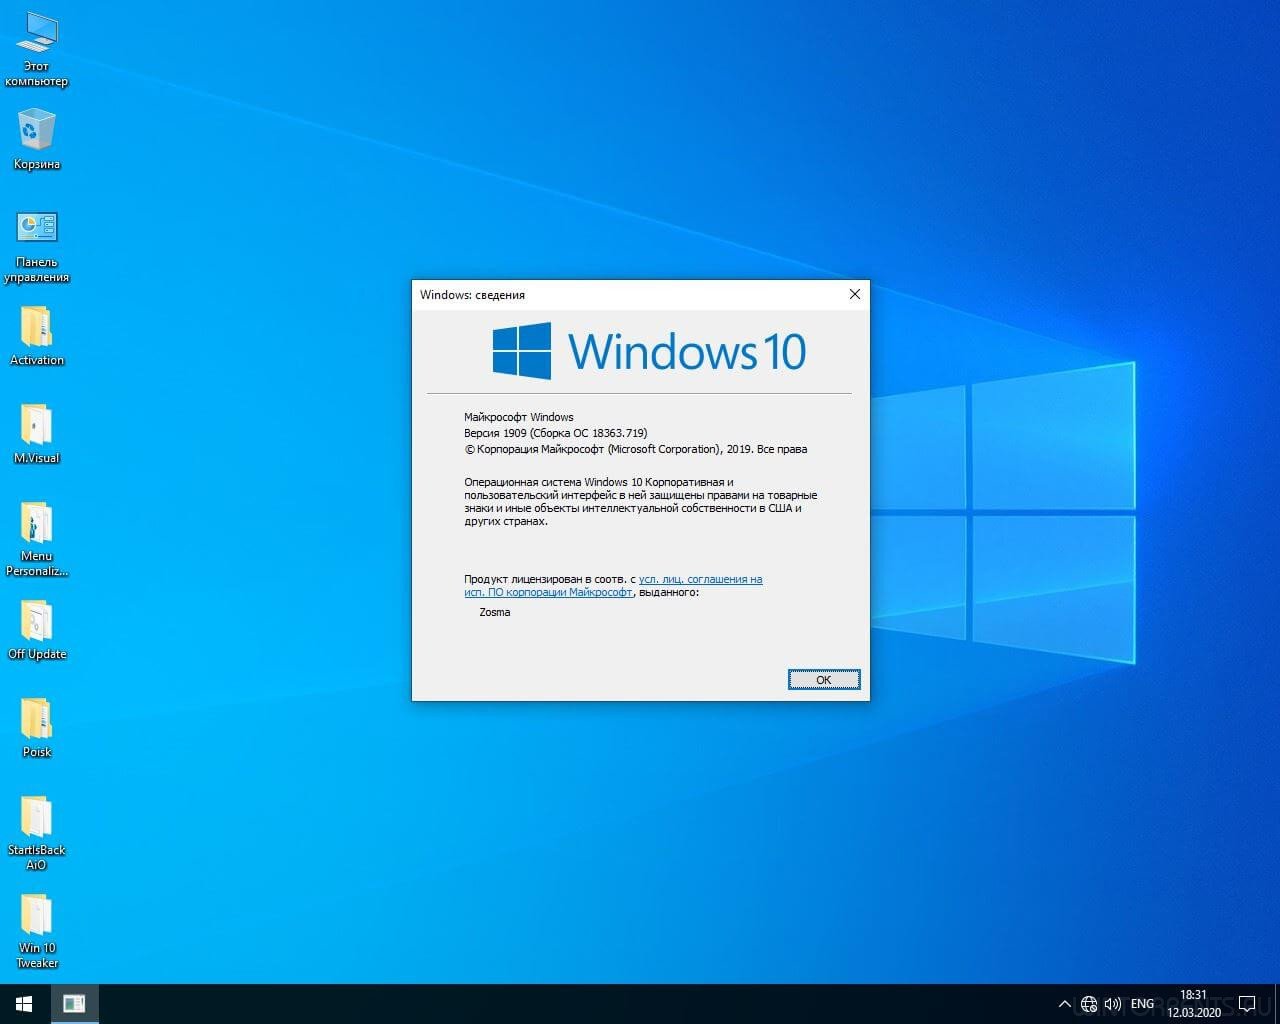 Windows 10 Enterprise (x64) Micro v.1909 build 18363.719 by Zosma